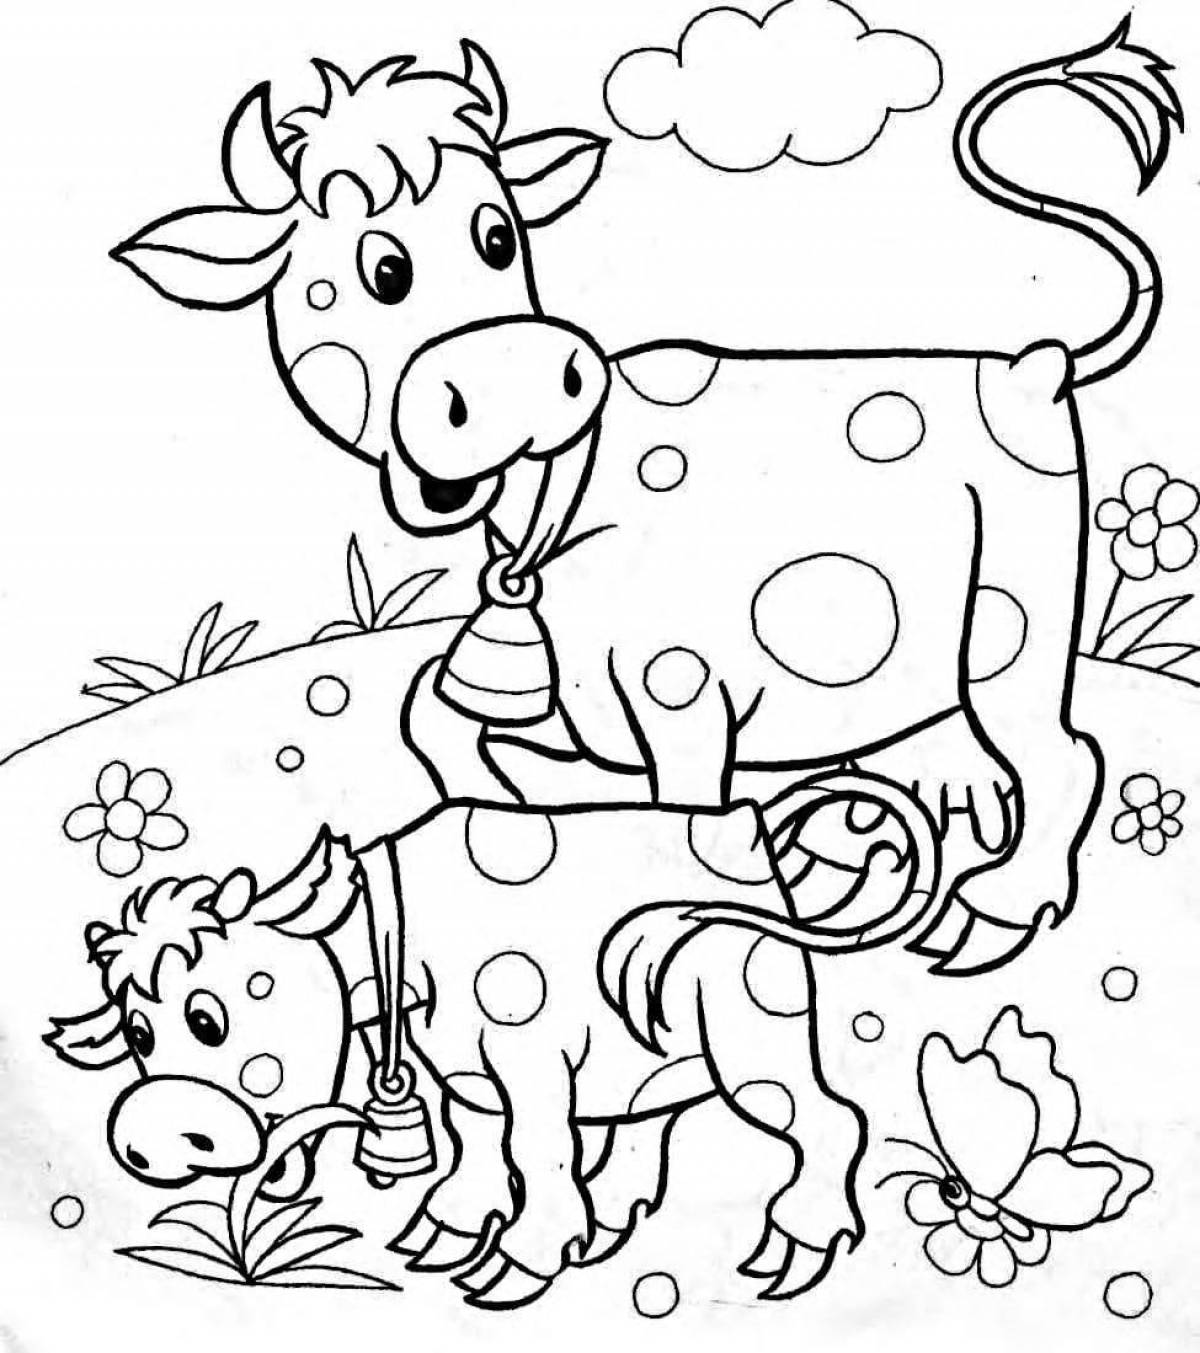 A fun cow coloring book for preschoolers